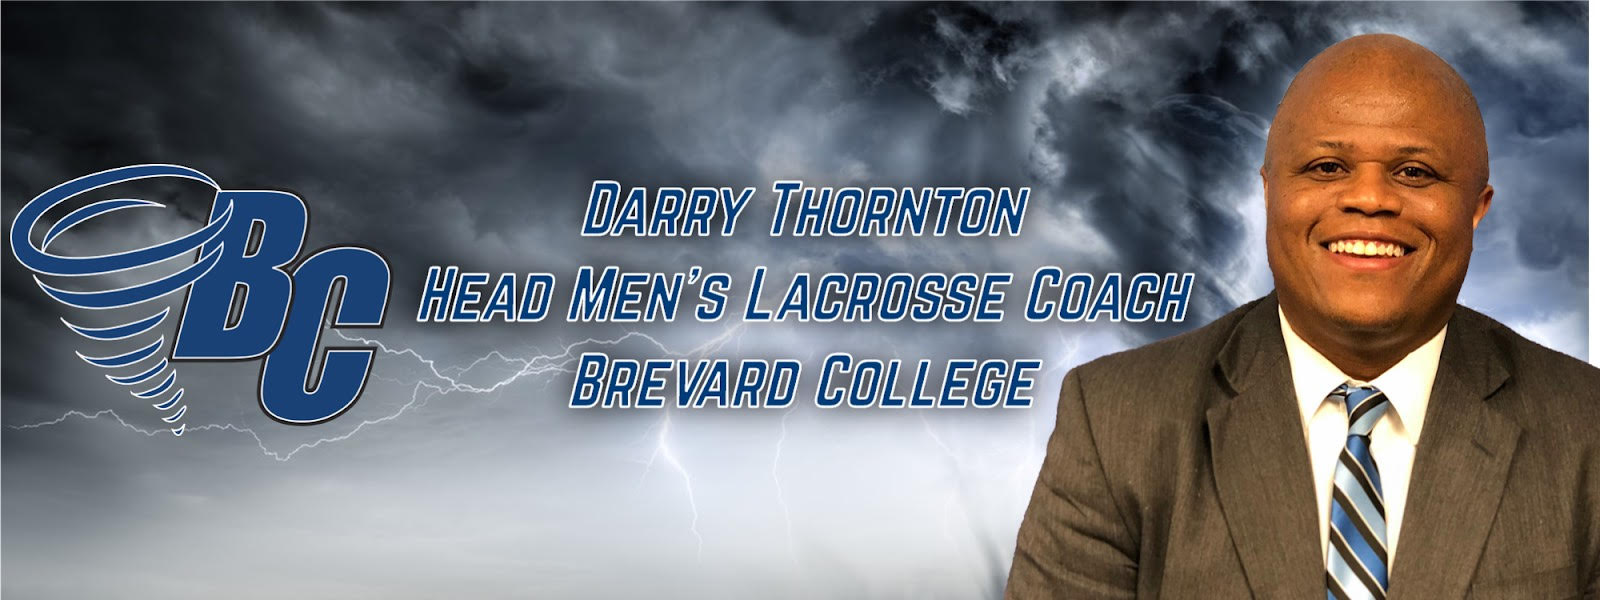 Thornton Named Head Men’s Lacrosse Coach at Brevard College